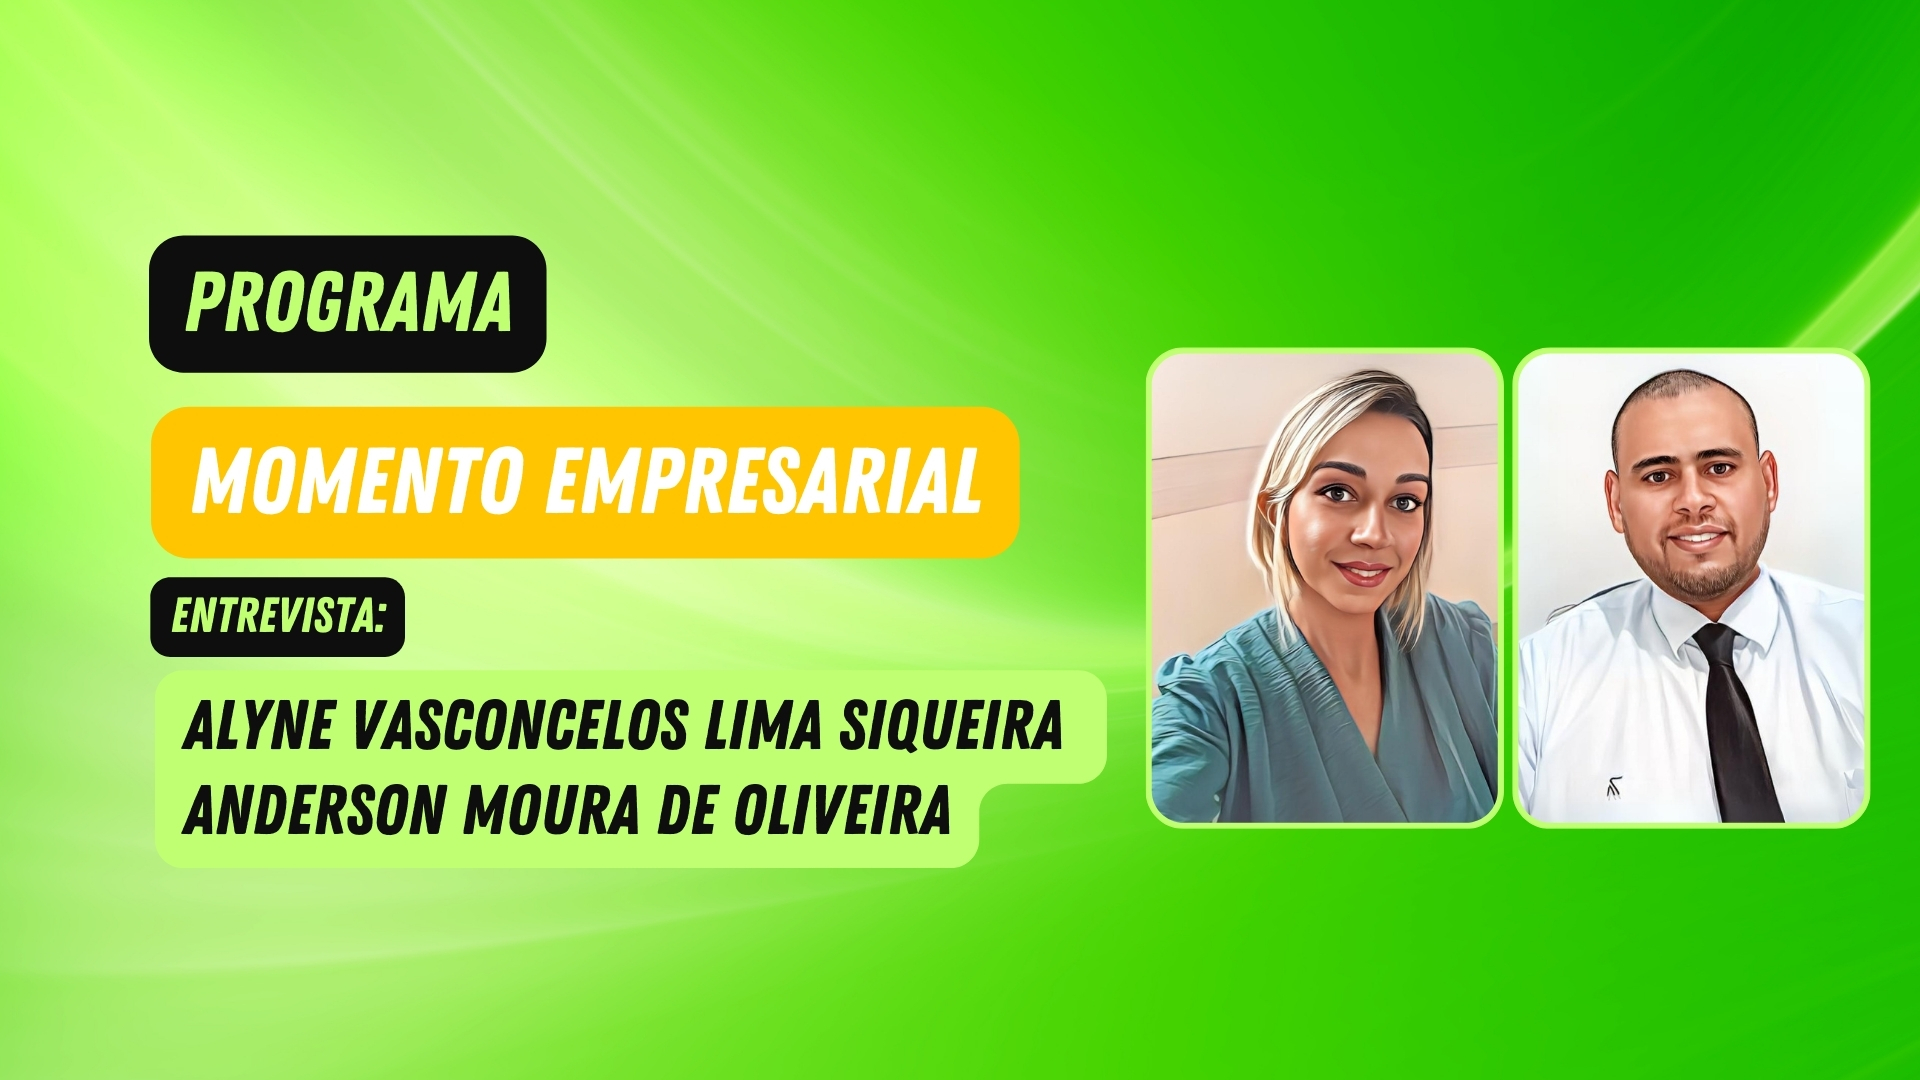 Programa Momento Empresarial entrevista: Alyne Vasconcelos L. Siqueira e Anderson moura de Oliveira - News Rondônia